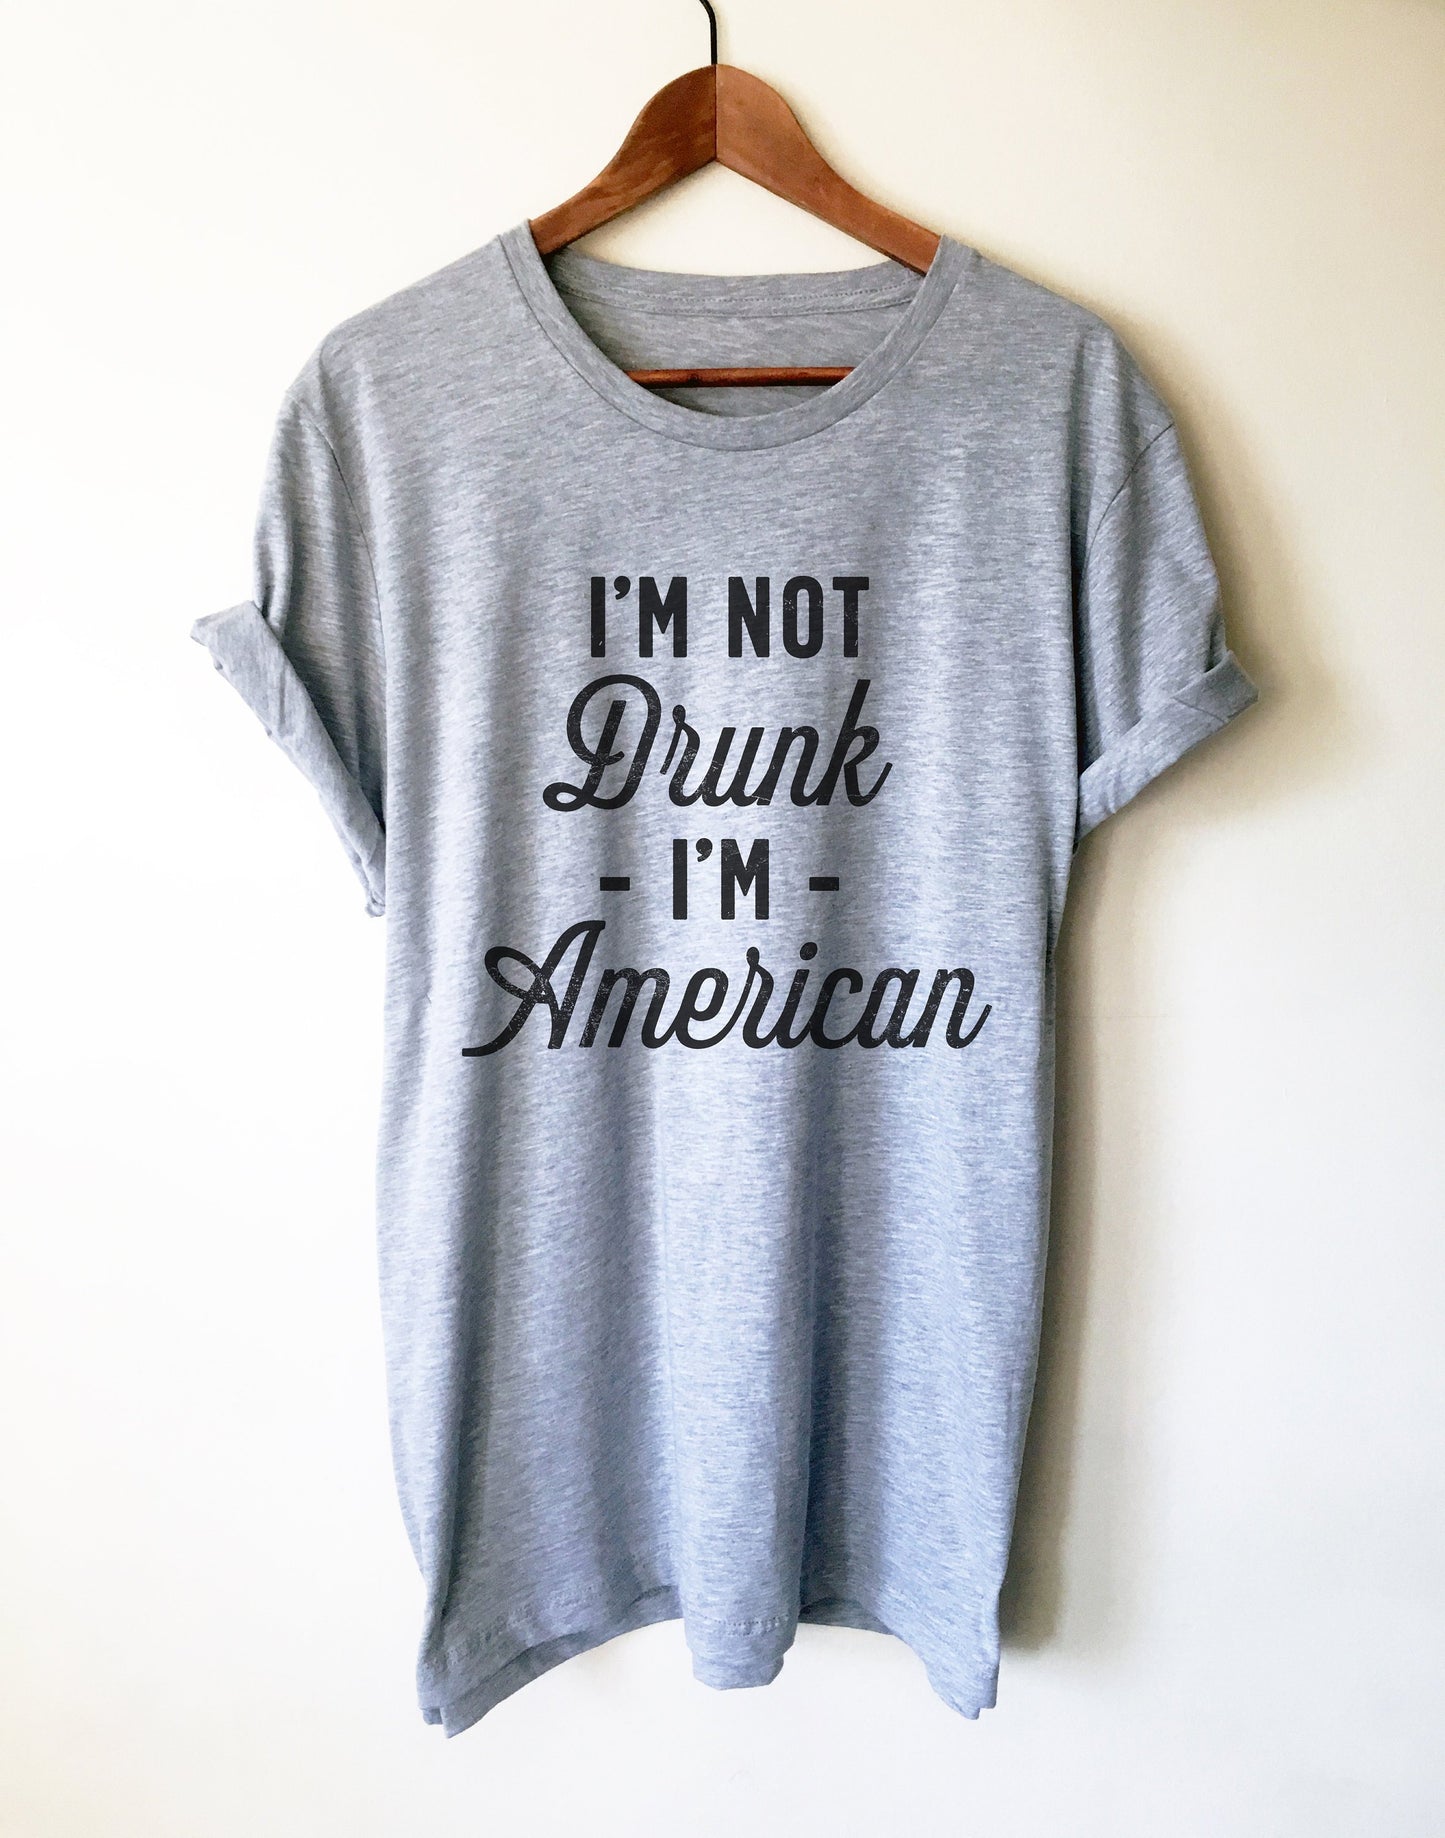 I’m Not Drunk I’m American Unisex Shirt - Independence Day Shirt, Independence Day Gift, Happy 4th July, Happy July 4, American Shirt